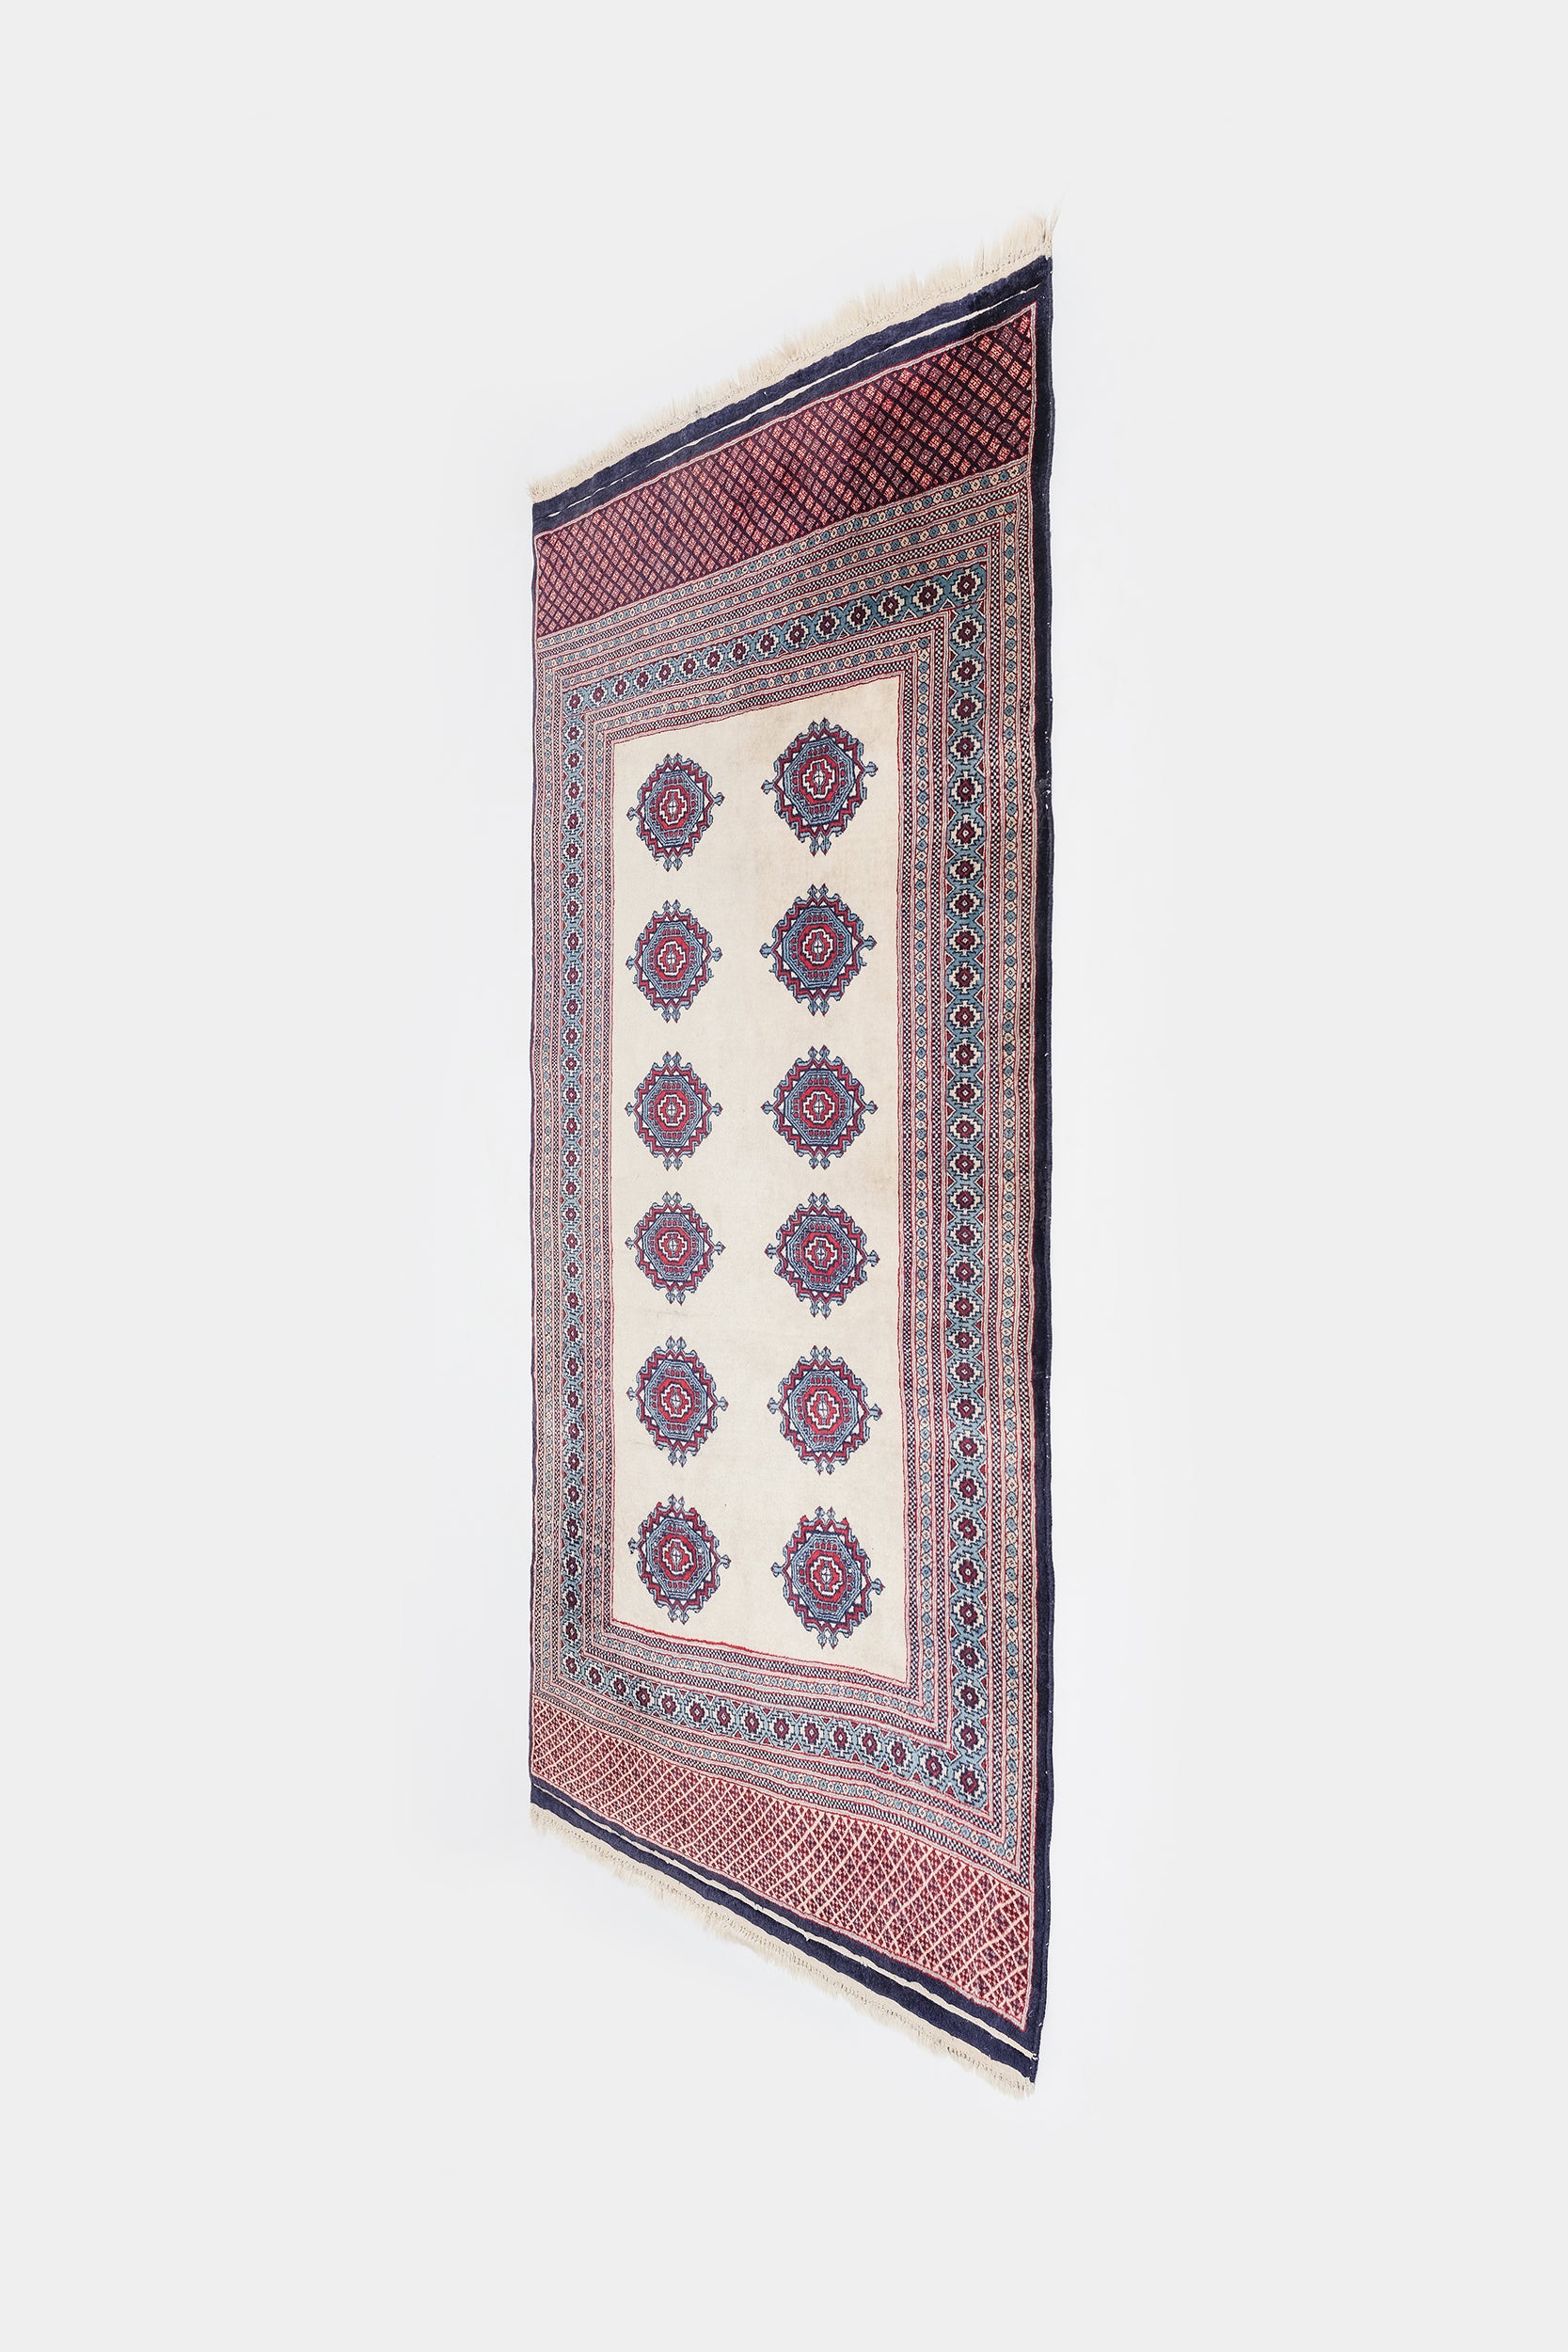 Turkmen Bukhari Teppich, Persien, 20er